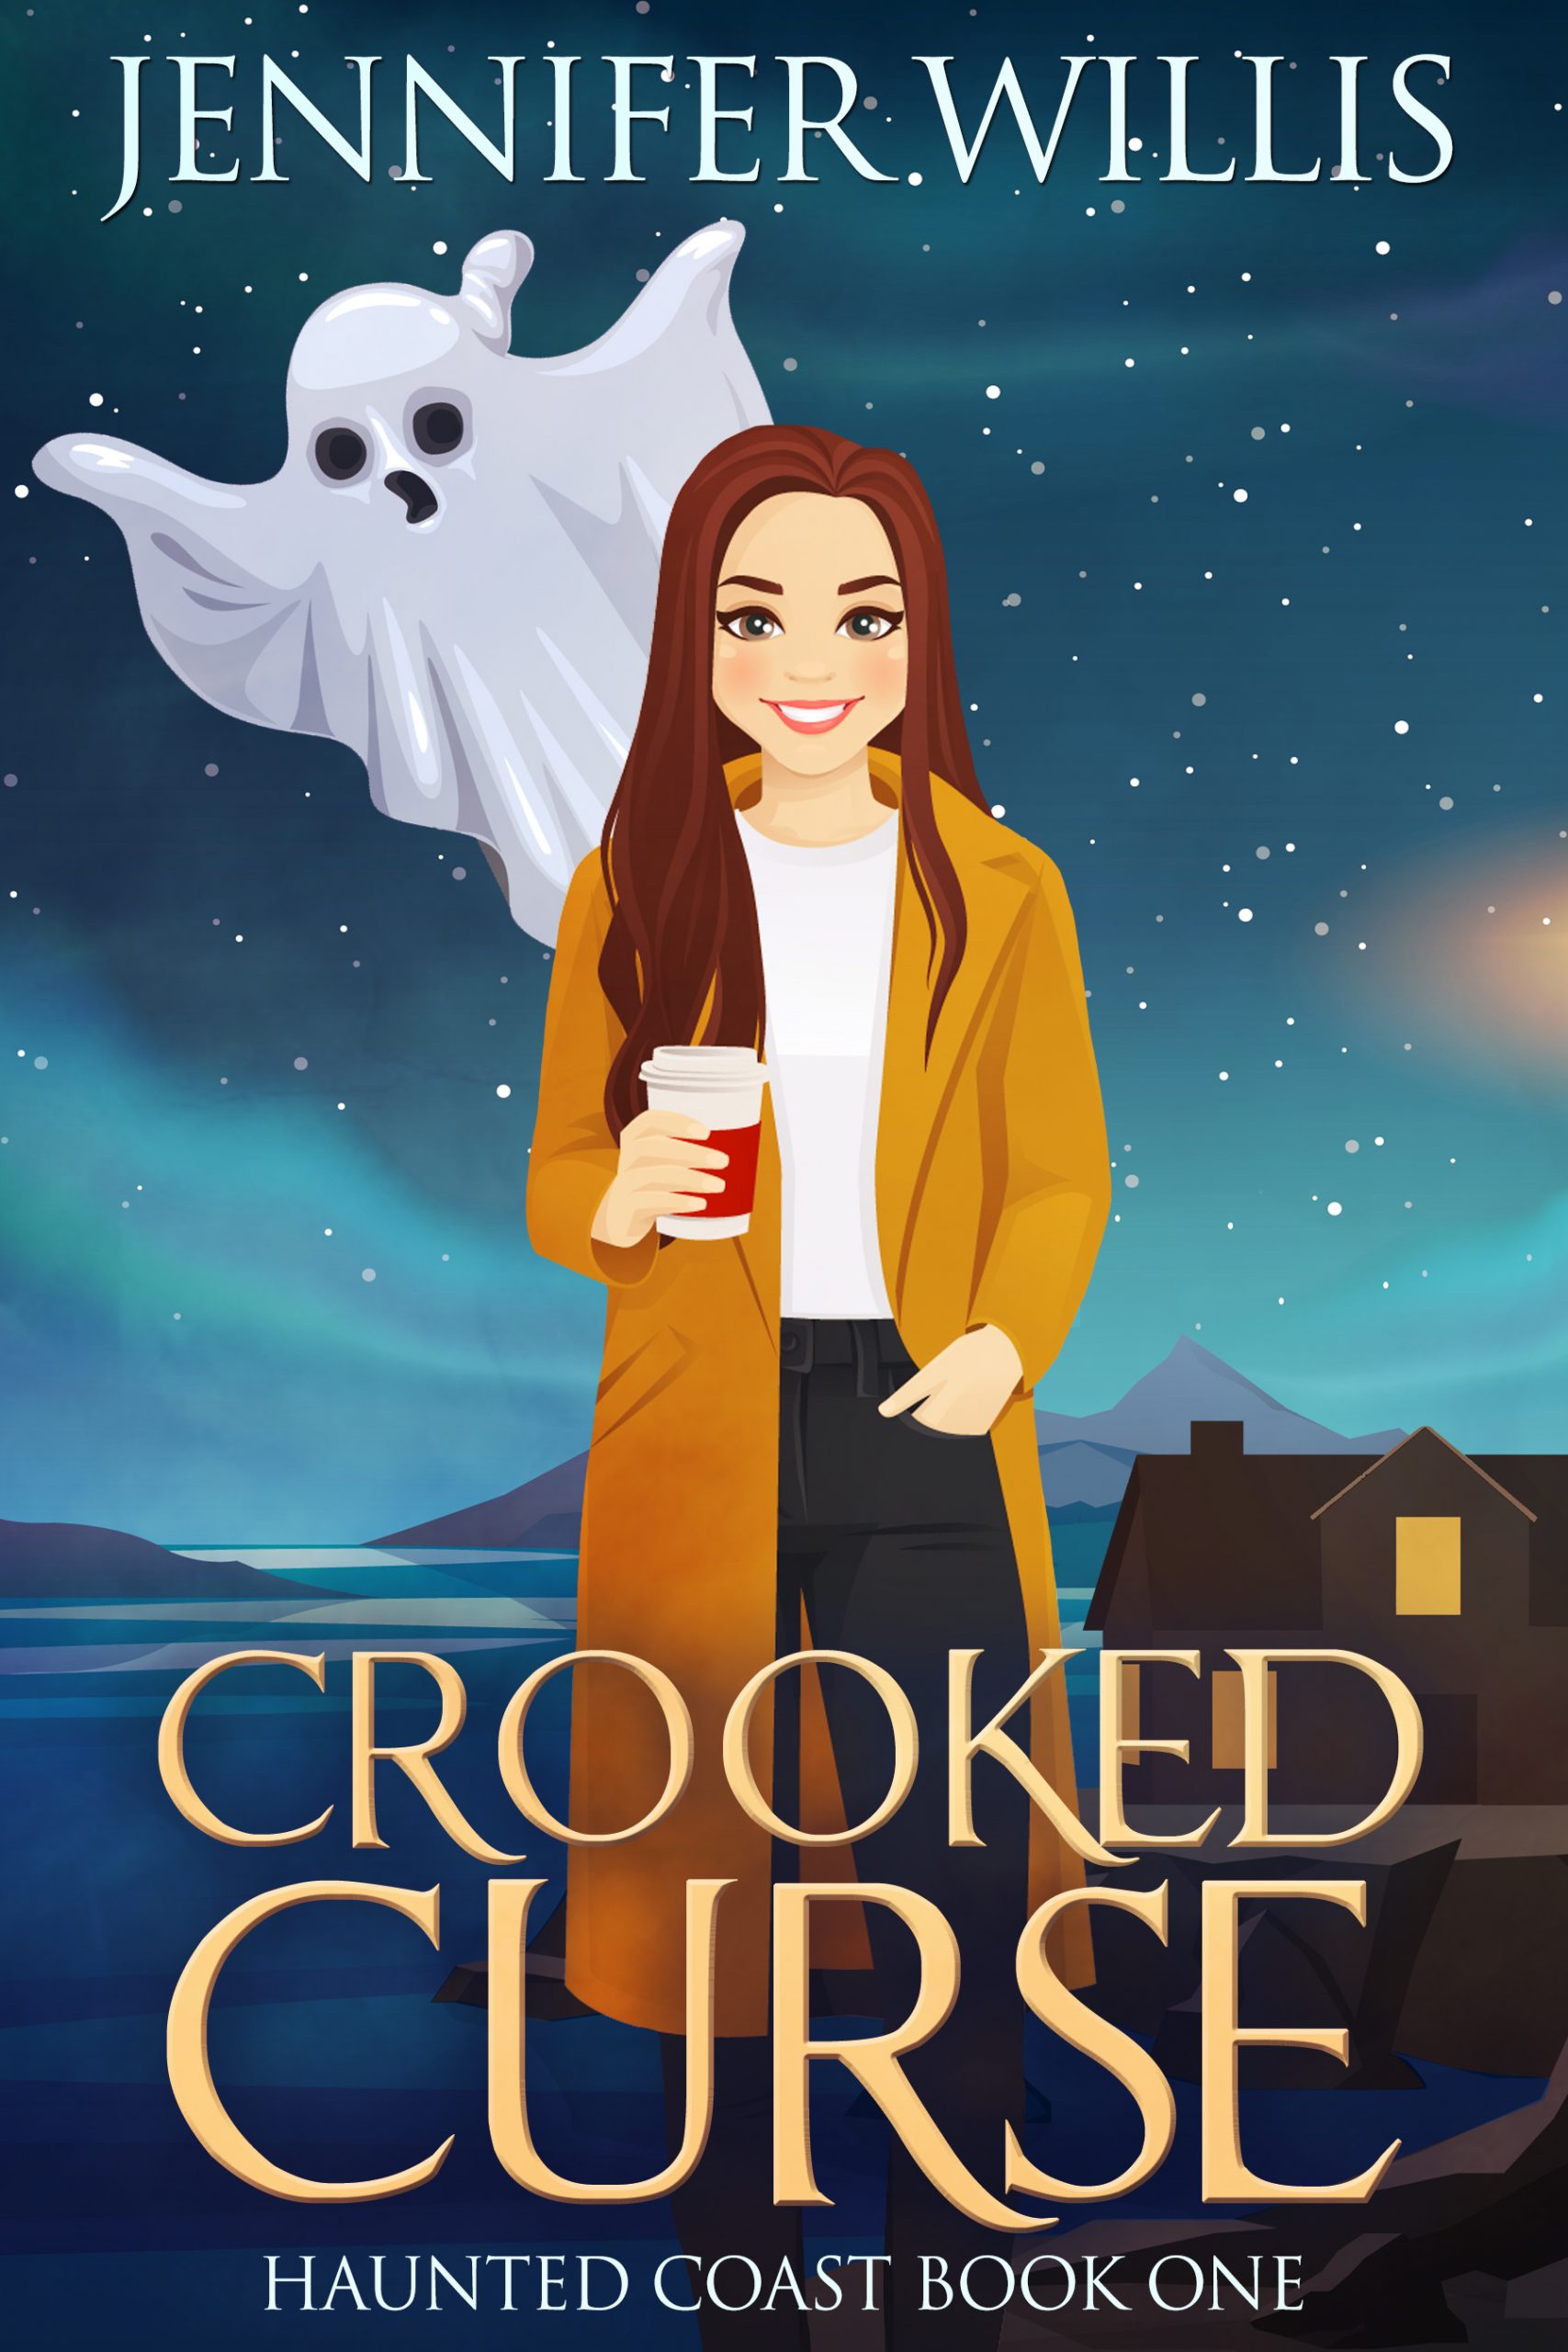 Crooked Curse (Haunted Coast book 1) by Jennifer Willis